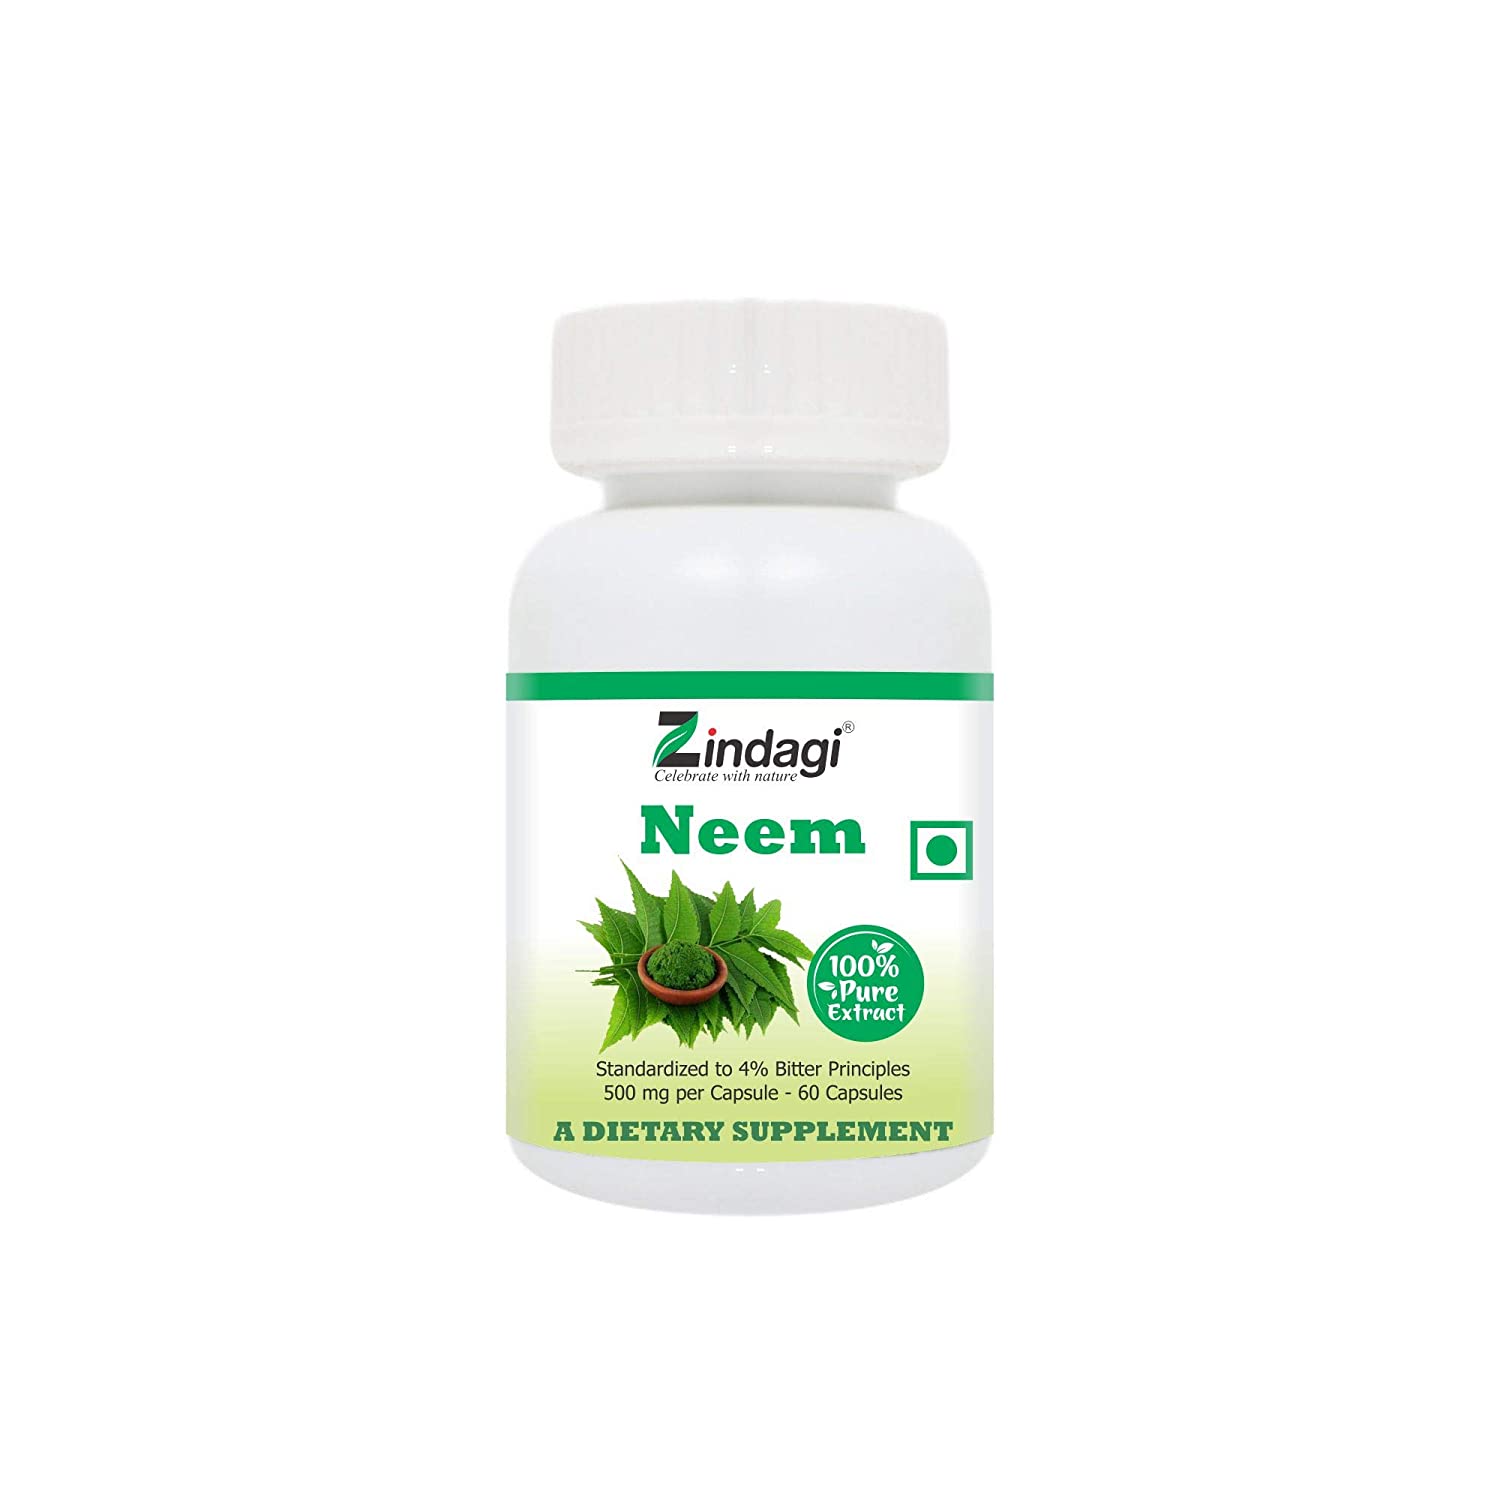 Buy Zindagi 100% Pure Neem Extract Capsules - Dietary Supplement - Anti Bacterial Properties (60 Caps Pack of 2) at Best Price Online